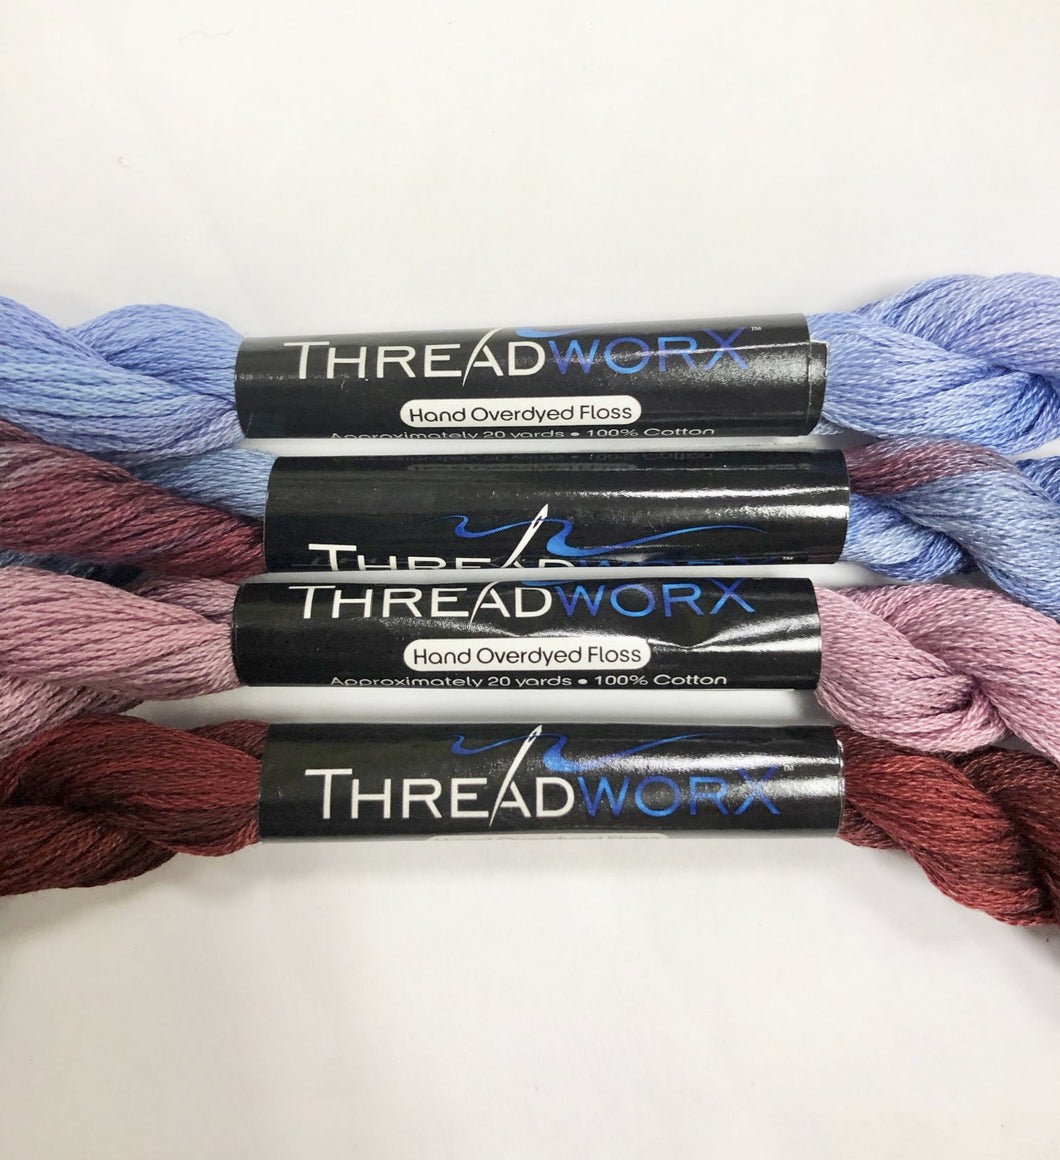 threadworX  overdyed floss